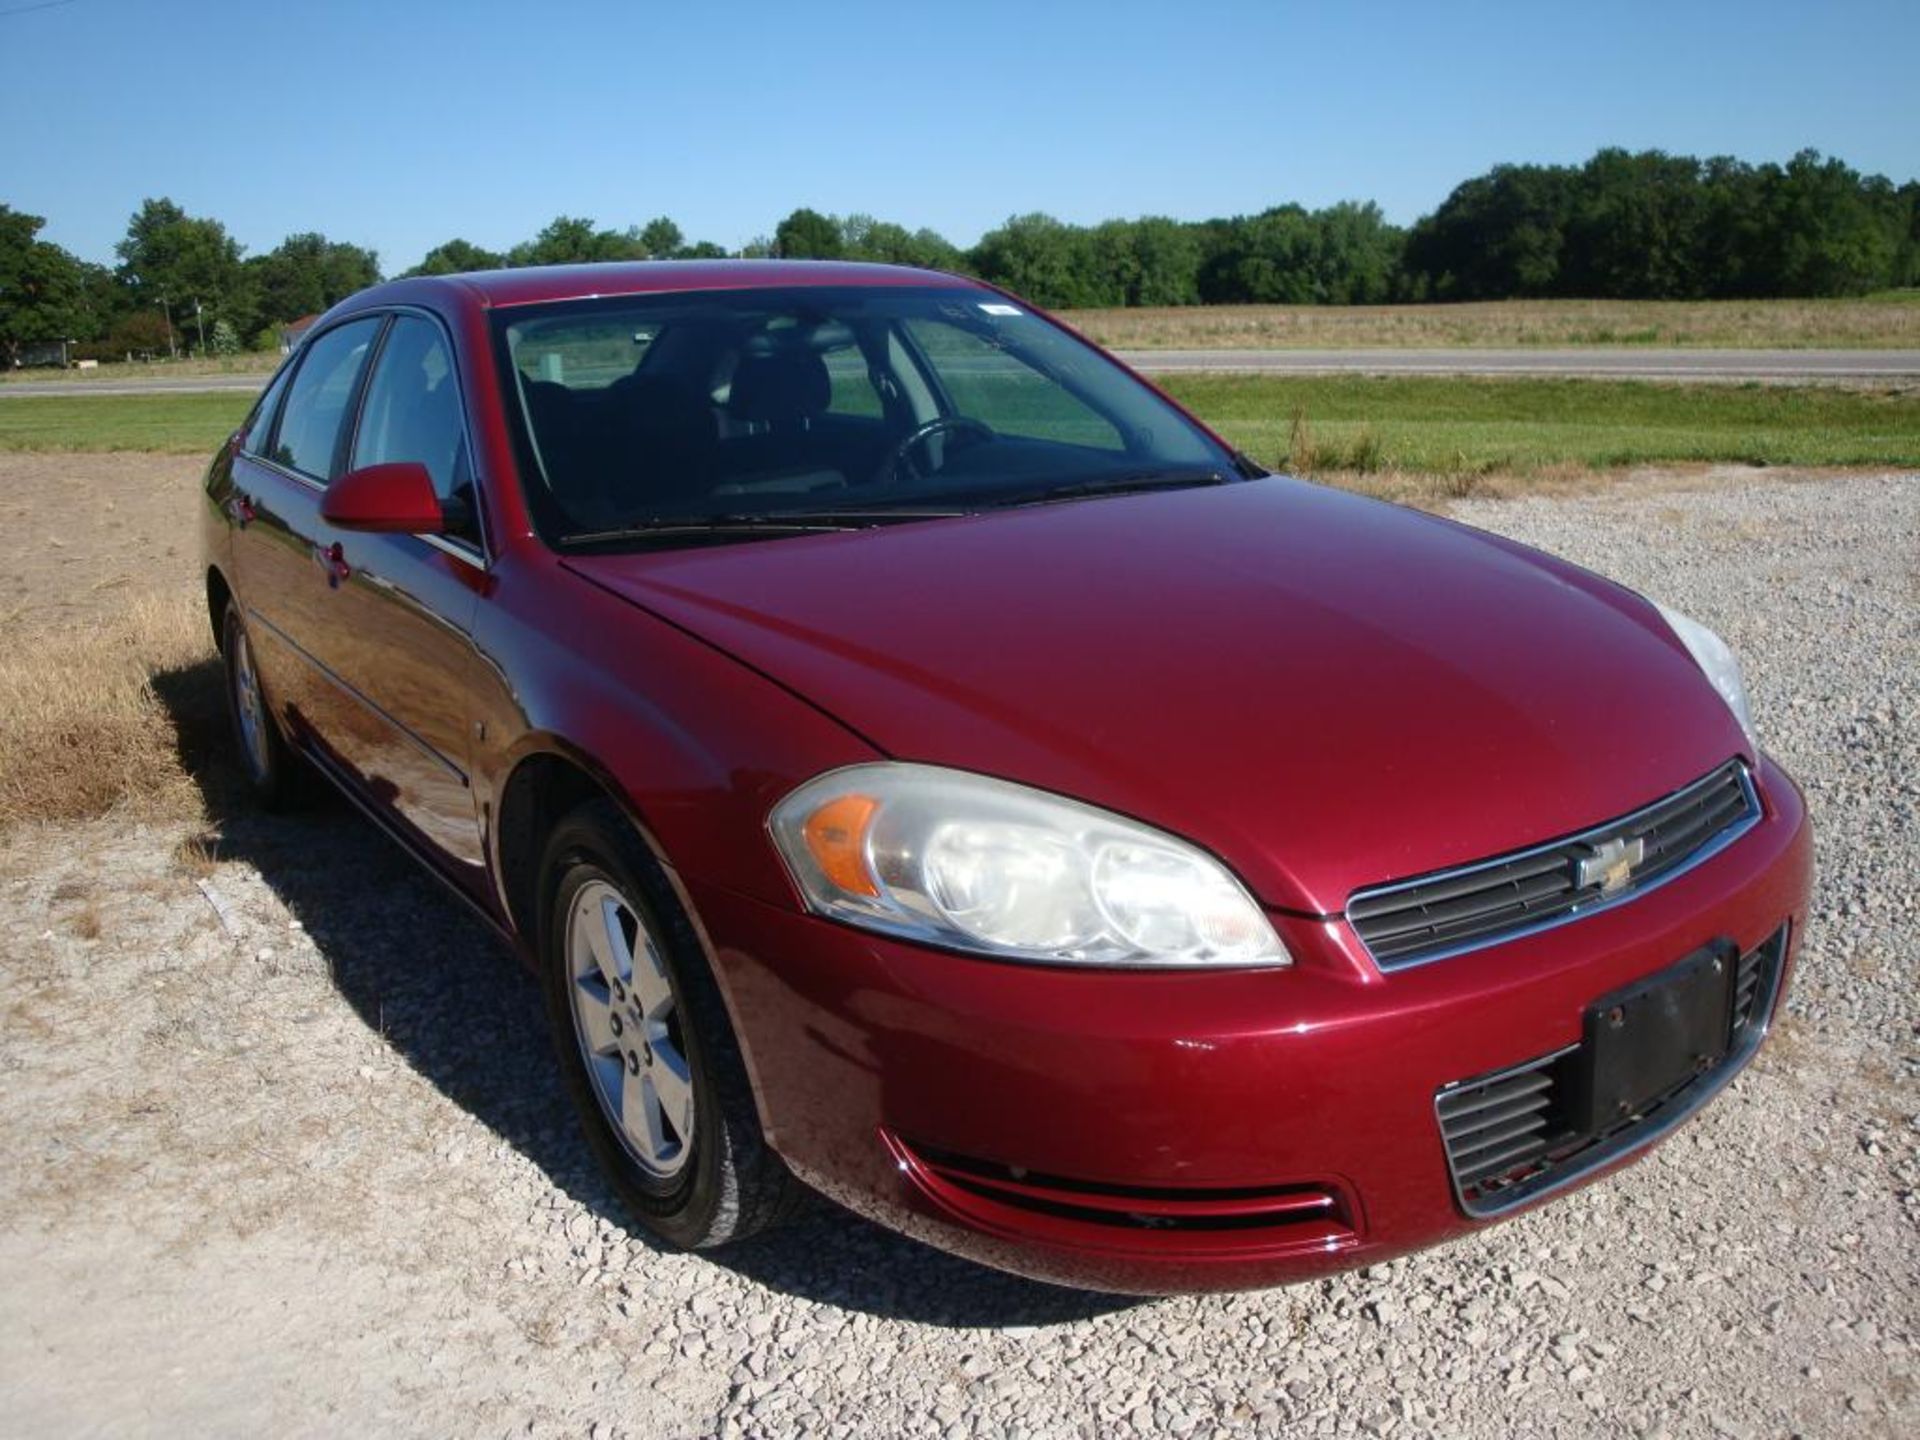 (Title) 2006 Chevrolet Impala,vin 2G1WT58K869365554, 3.5L V6, 72,141 miles - Image 5 of 20